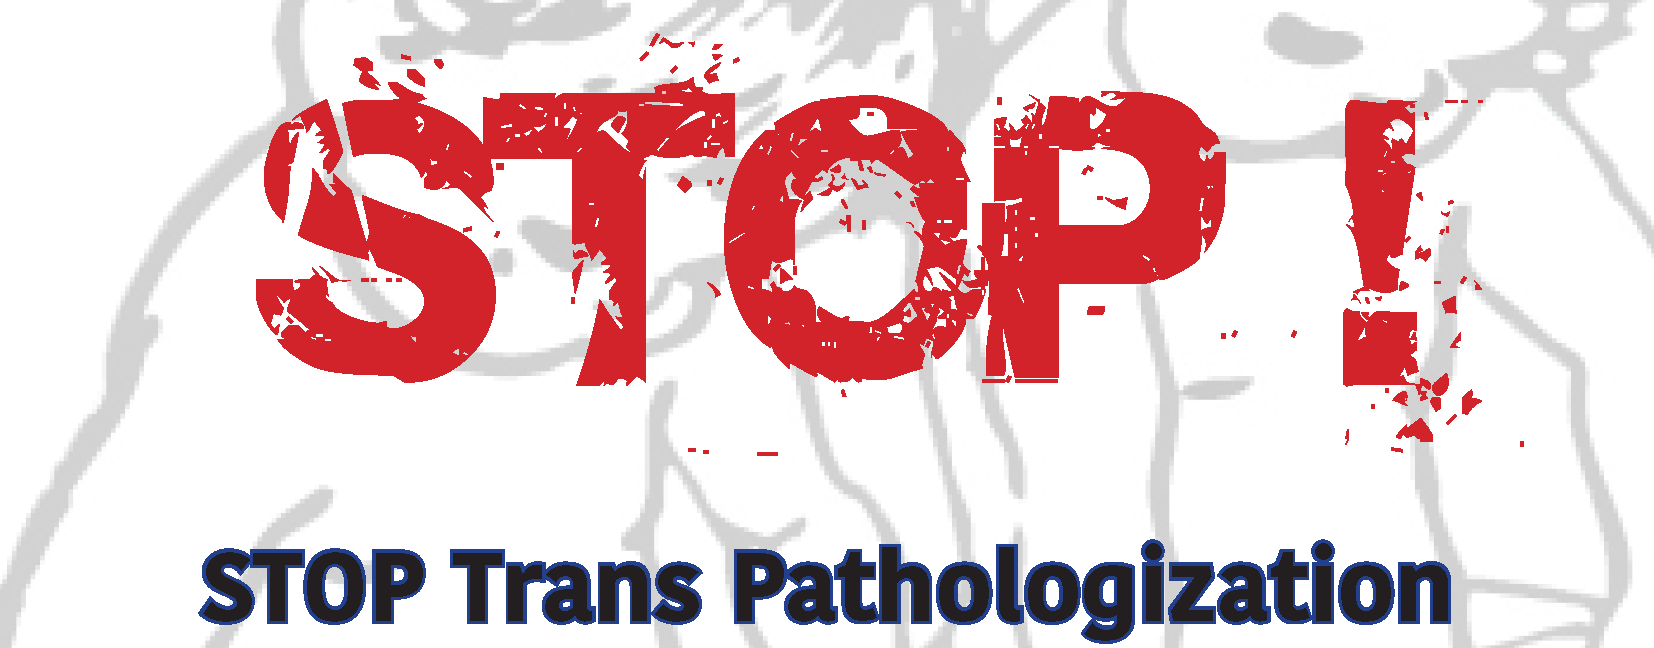 stop trans pathologization.png